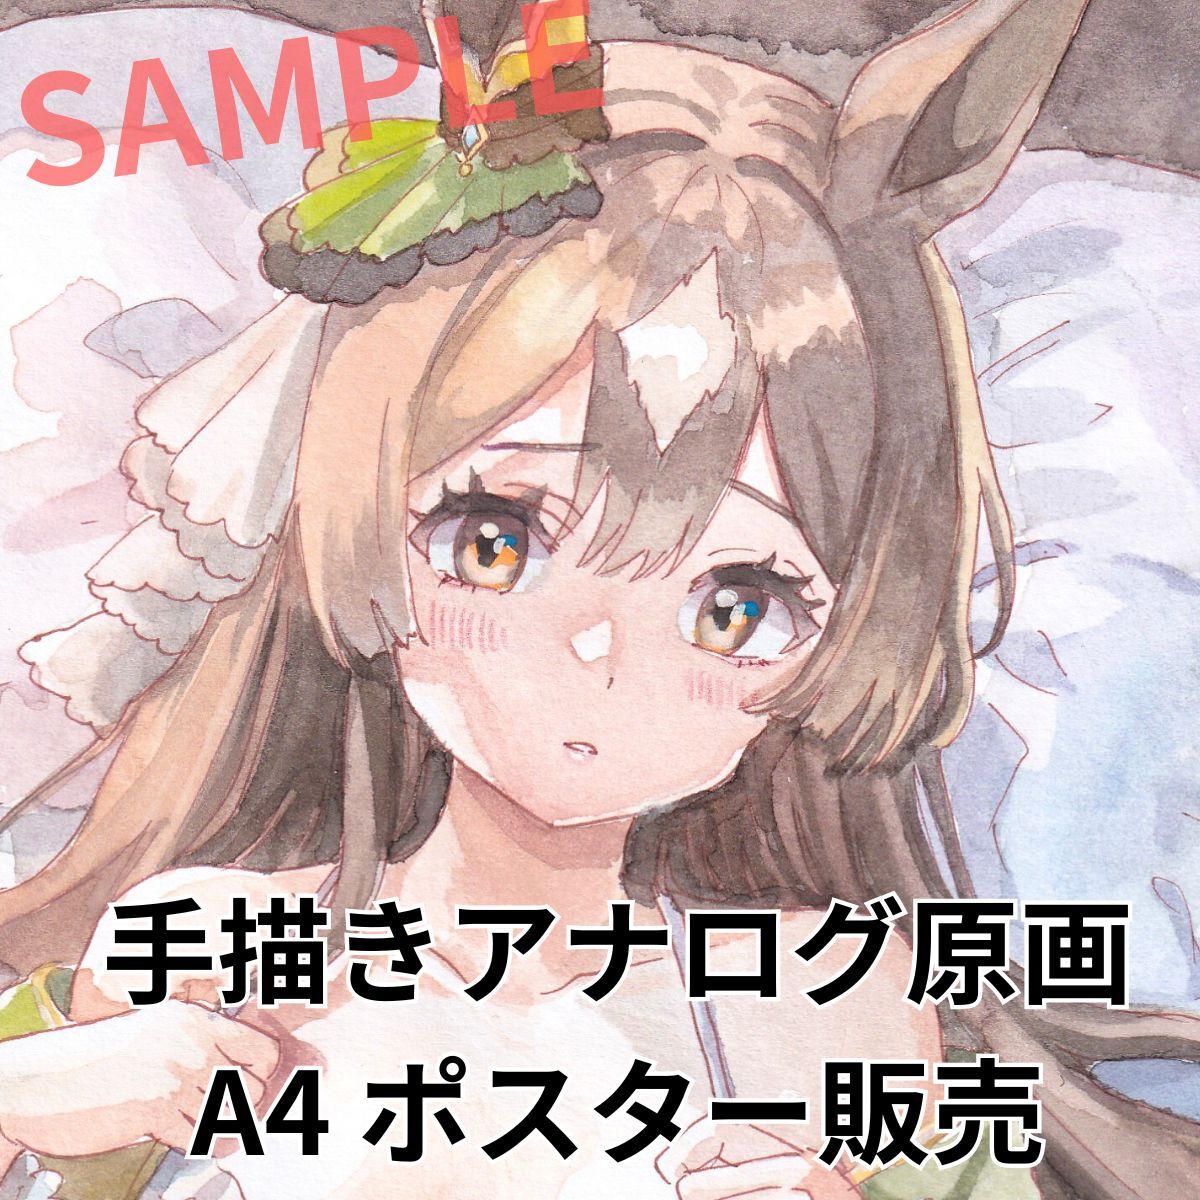 A4-Poster, handgezeichnetes Kunstwerk, Illustration Uma Musume Satono Diamond Dia-chan, Anime-Spiel, Doujin 2404173, Poster, Comics, Animation, Eine Reihe